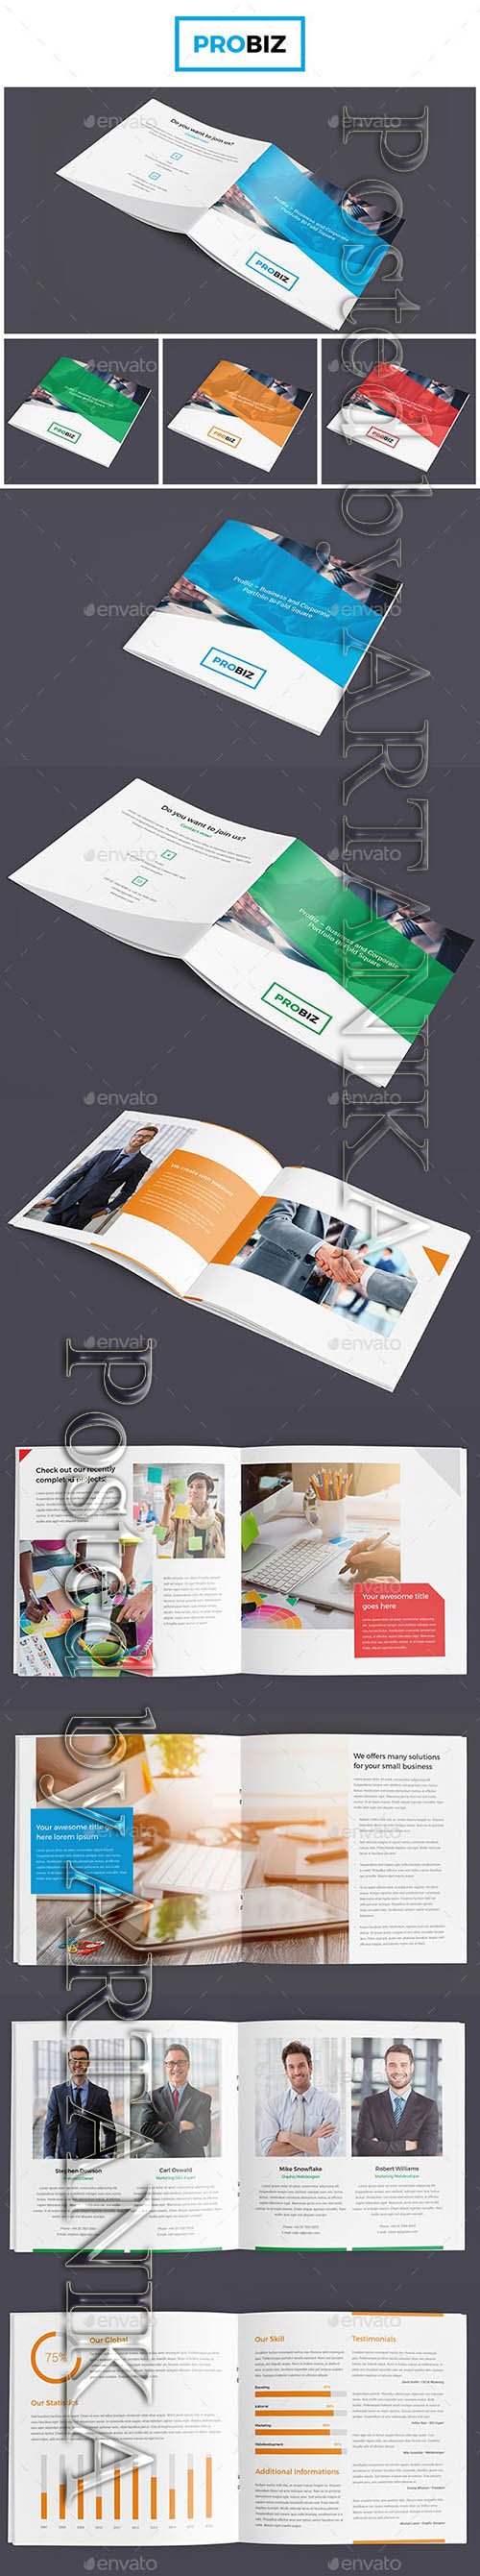 Graphicriver - ProBiz – Business and Corporate Portfolio Bi-Fold Square 19079782